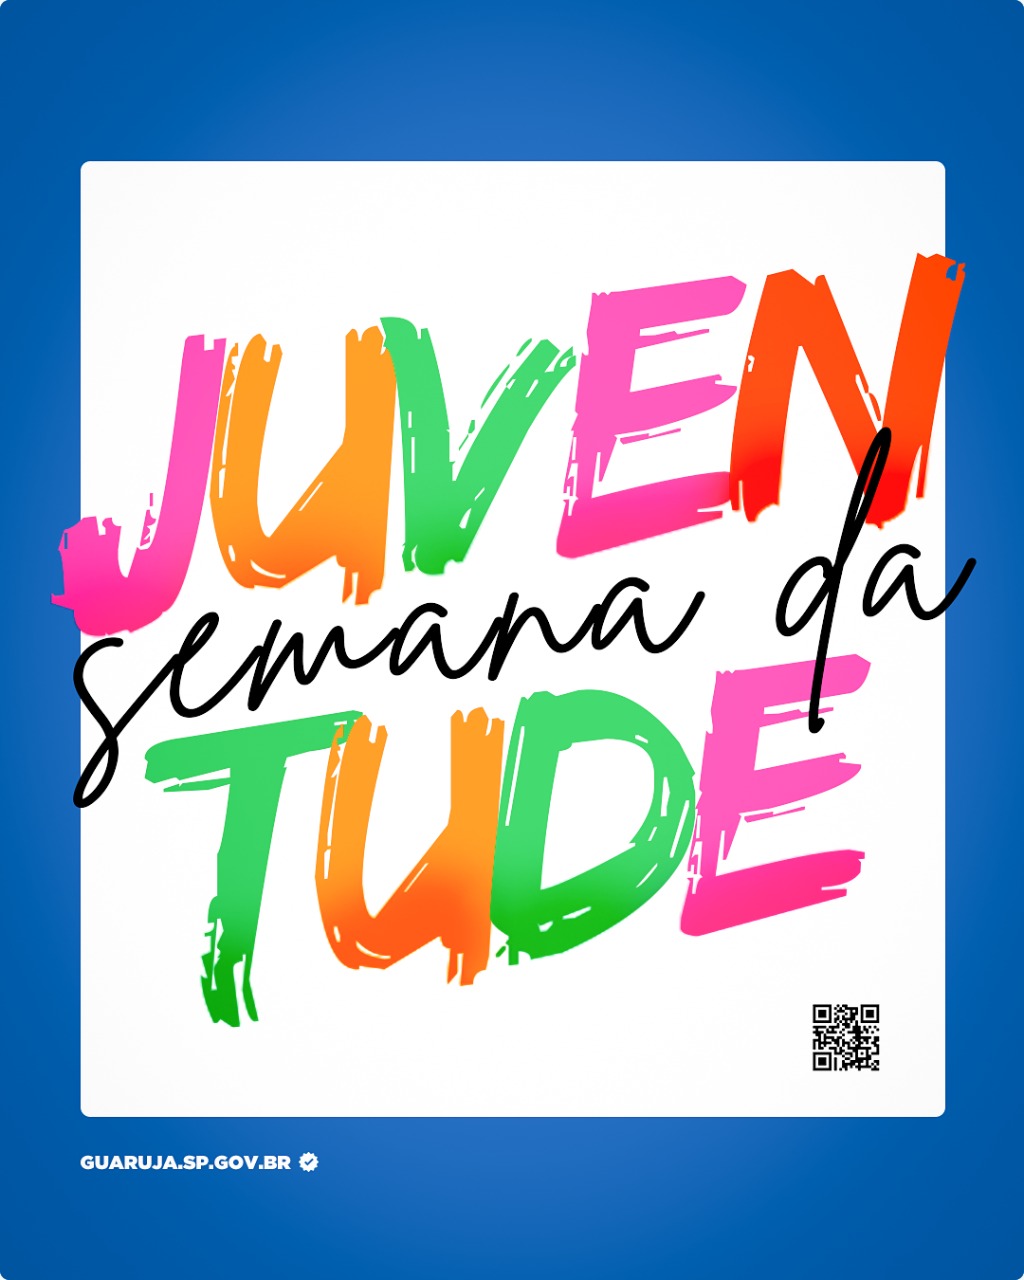 Guarujá promove Semana da Juventude